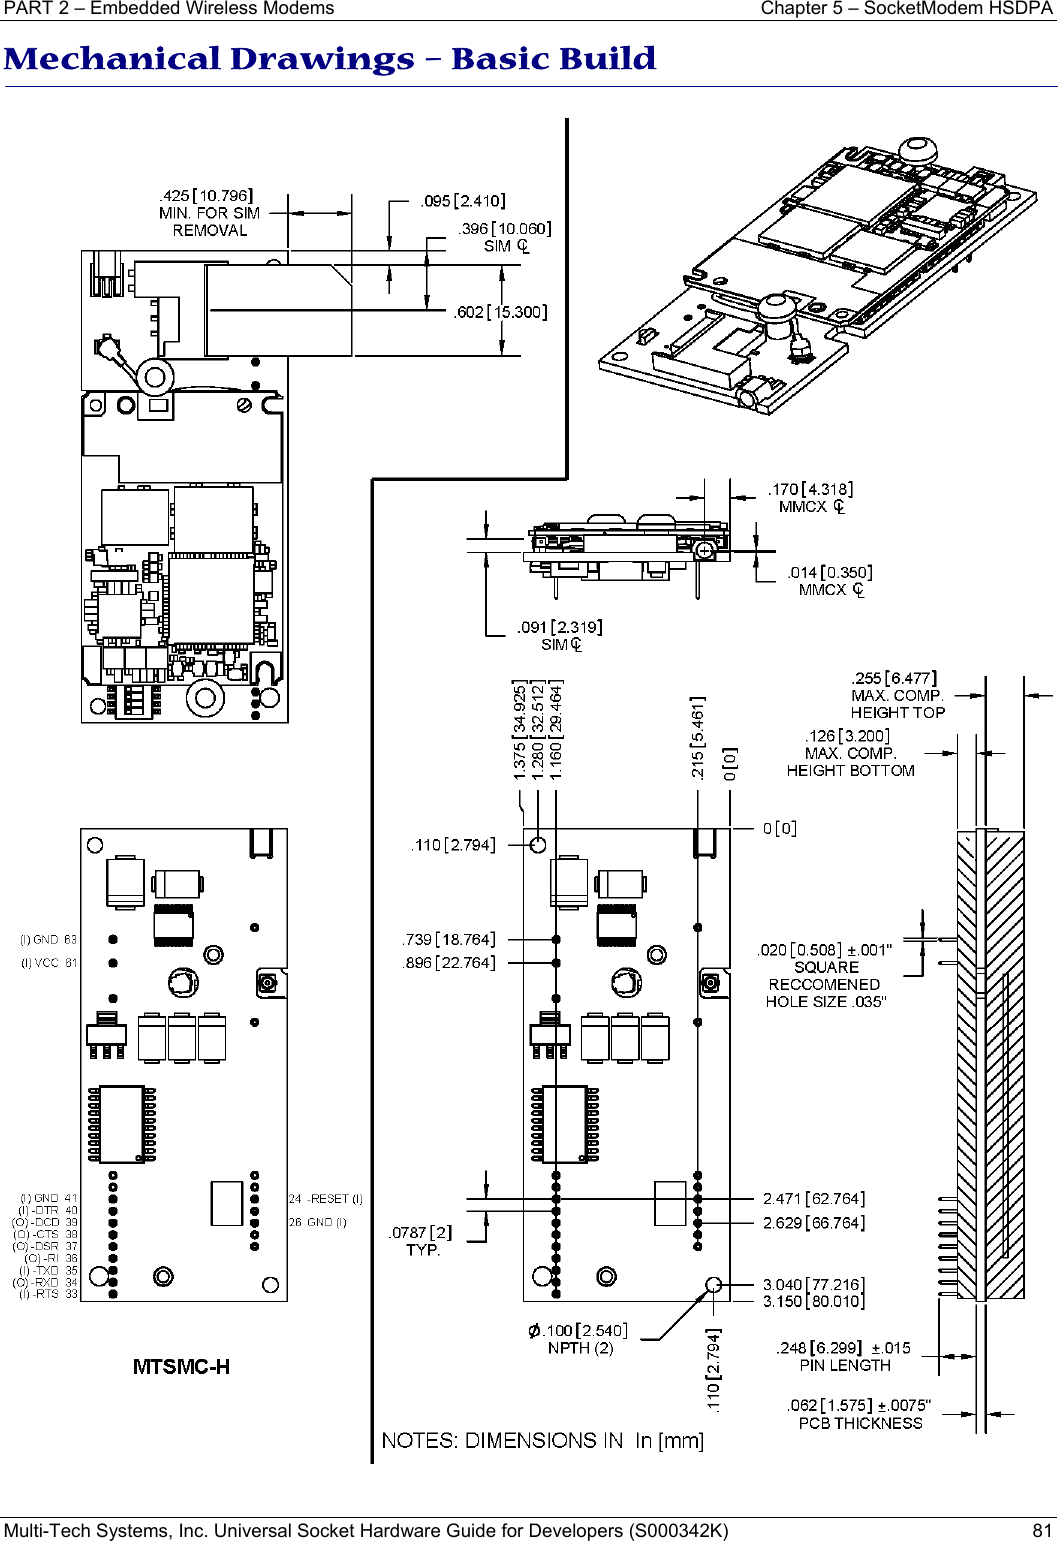 PART 2 – Embedded Wireless Modems  Chapter 5 – SocketModem HSDPA Multi-Tech Systems, Inc. Universal Socket Hardware Guide for Developers (S000342K)  81  Mechanical Drawings – Basic Build   